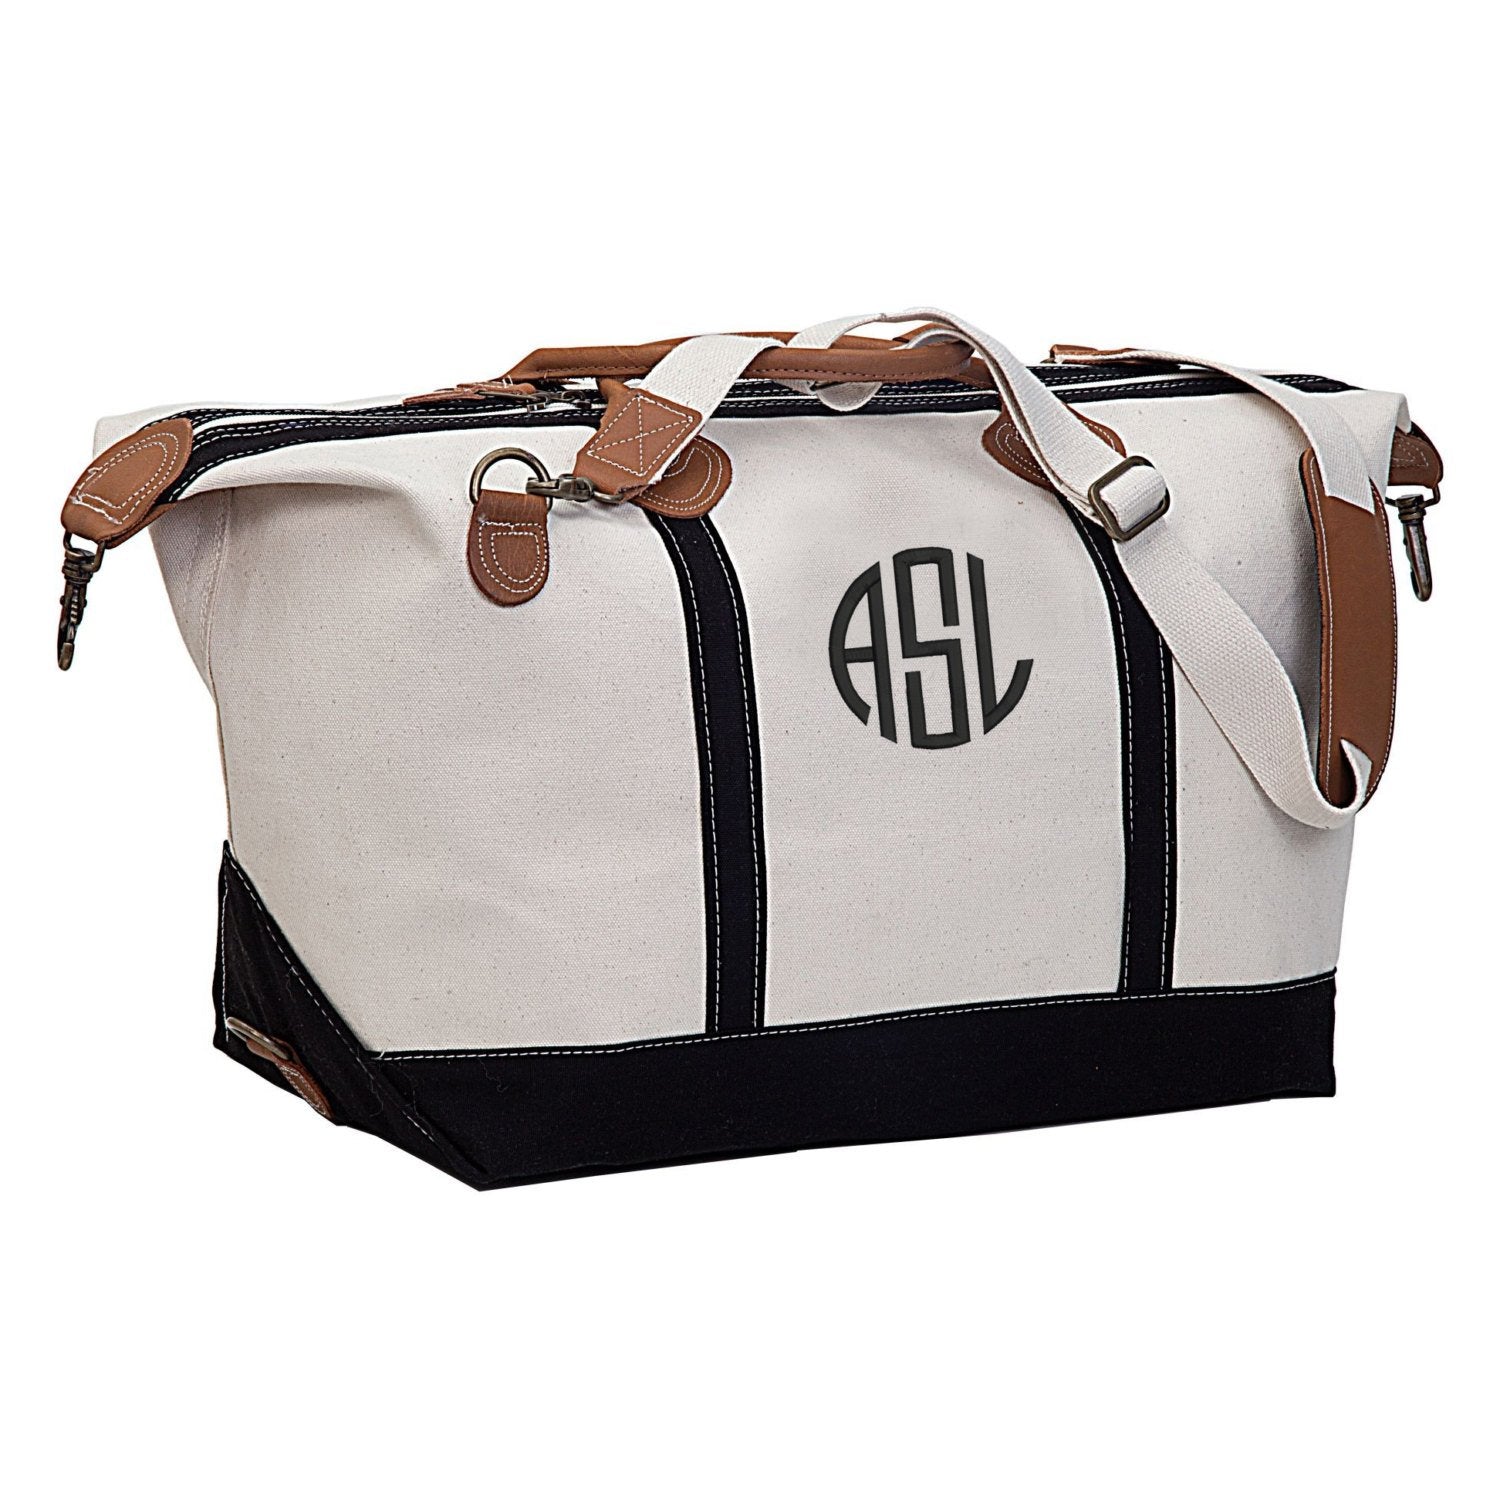 Personalized Weekender Bag - Marleylilly